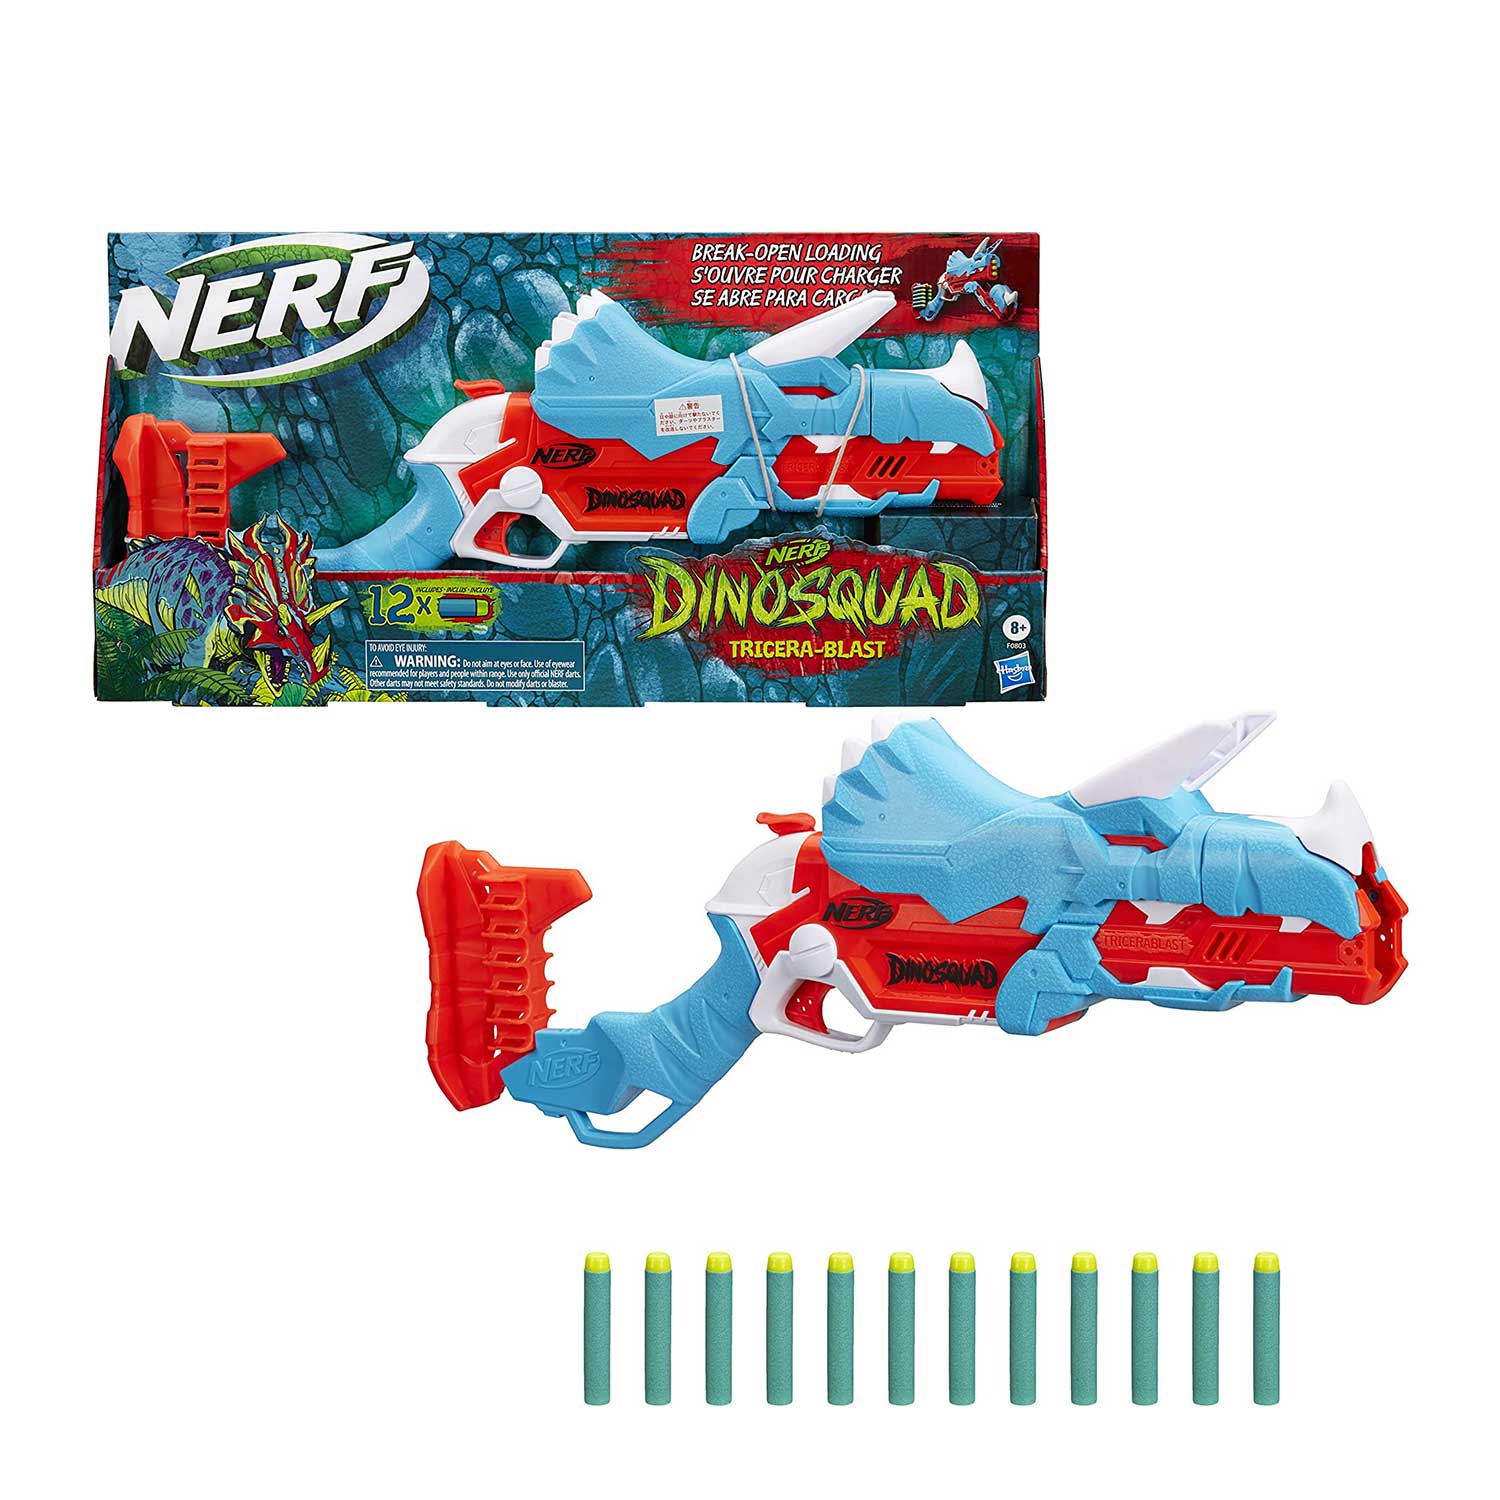 NERF DinoSquad Tricera-blast Blaster, Break-Open 3-Dart Loading, 12 Nerf Darts, Dart Storage, Triceratops Dinosaur Design - Mod: HSBF0803EU4